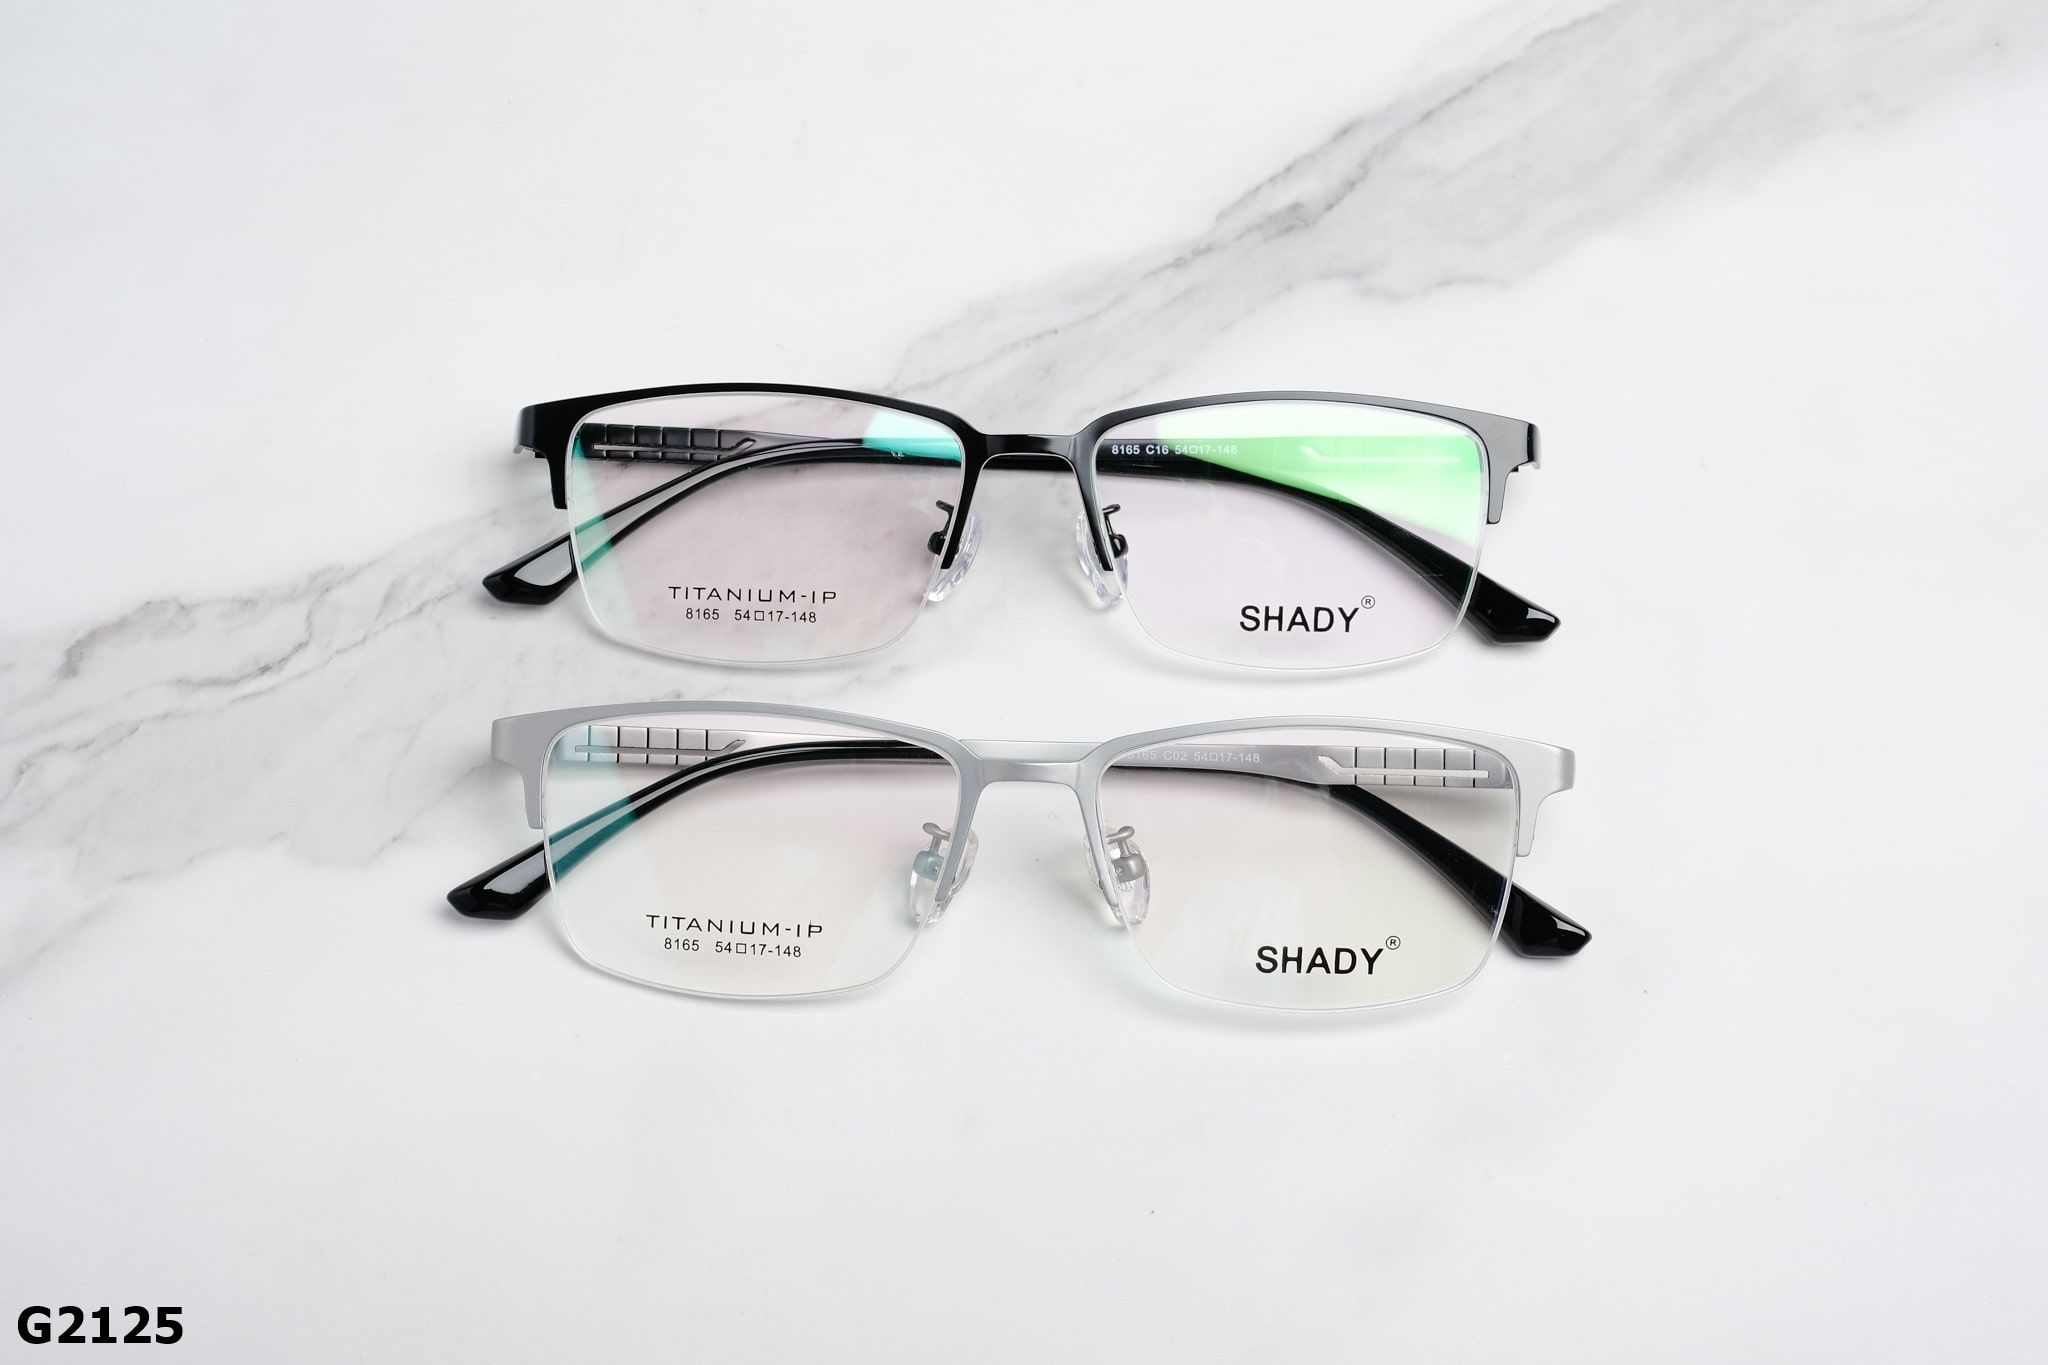  SHADY Eyewear - Glasses - G2125 